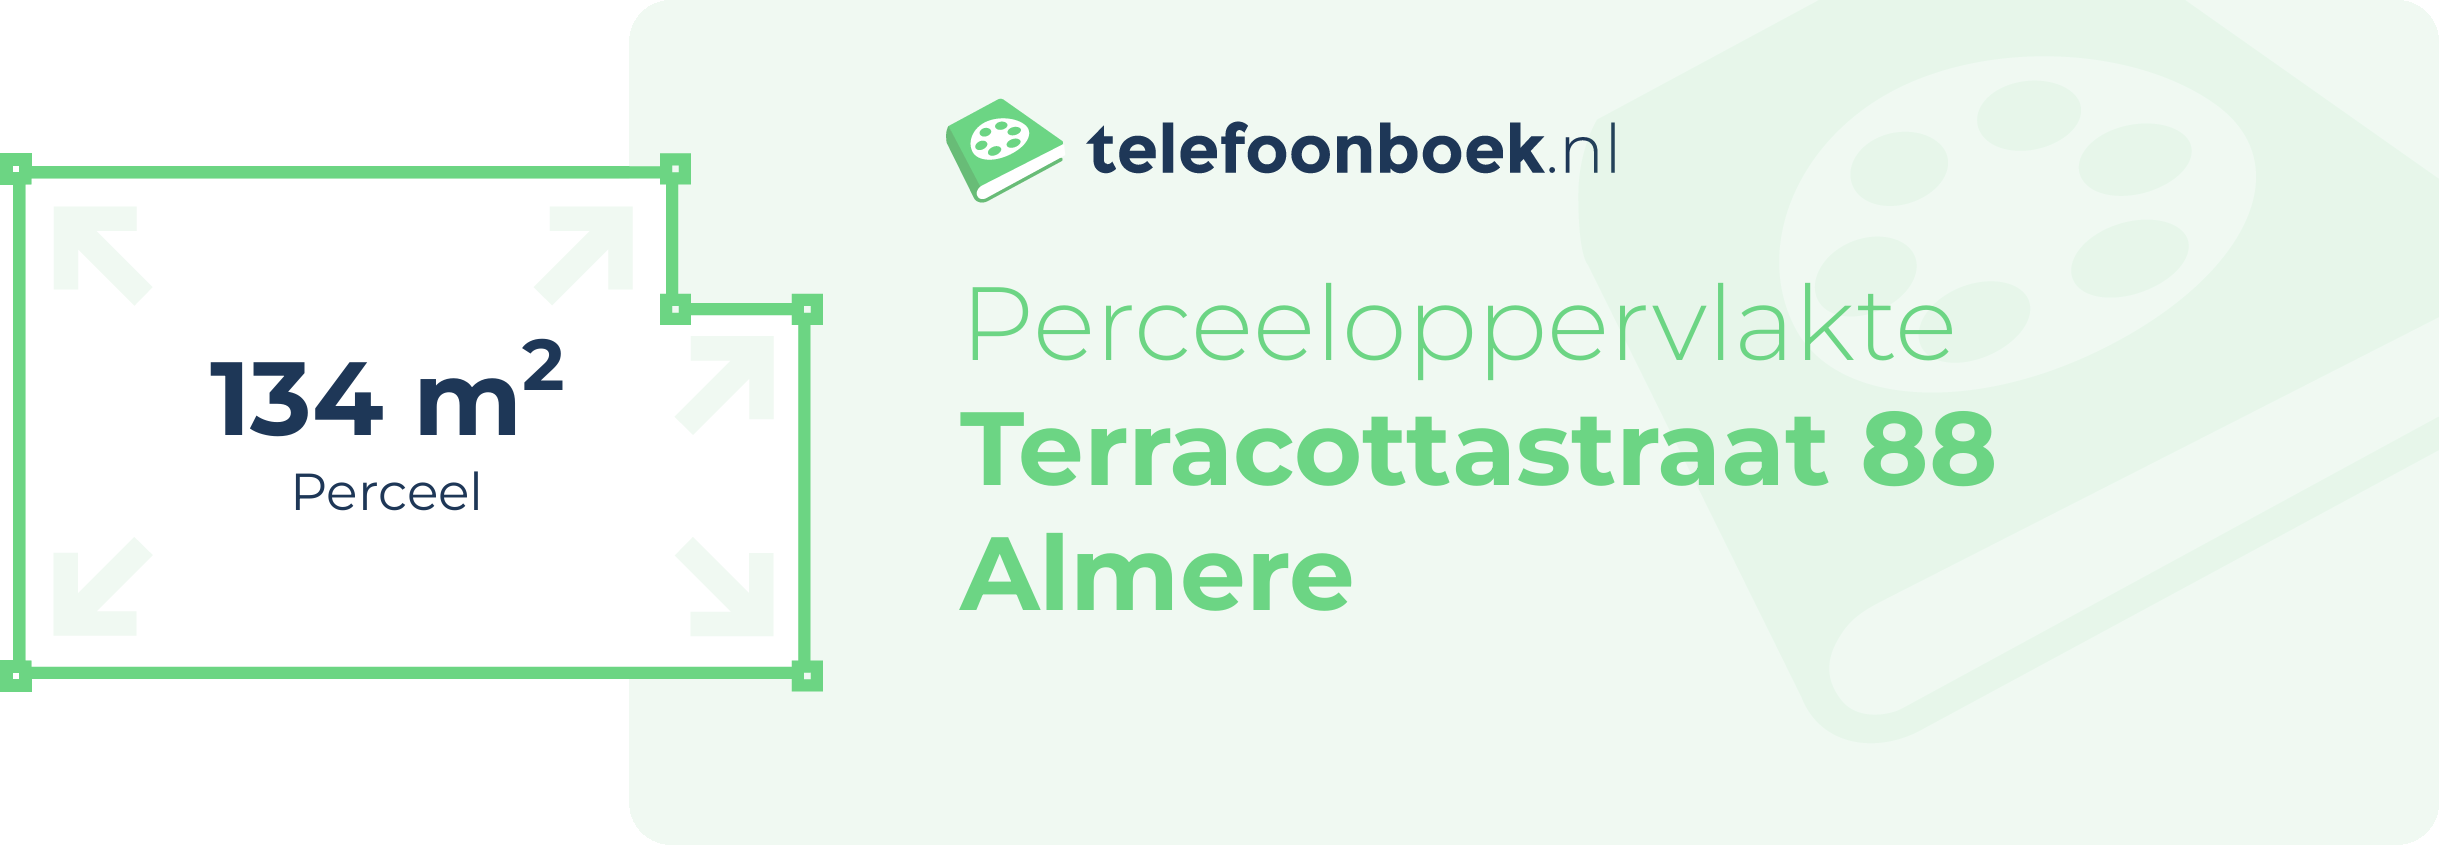 Perceeloppervlakte Terracottastraat 88 Almere